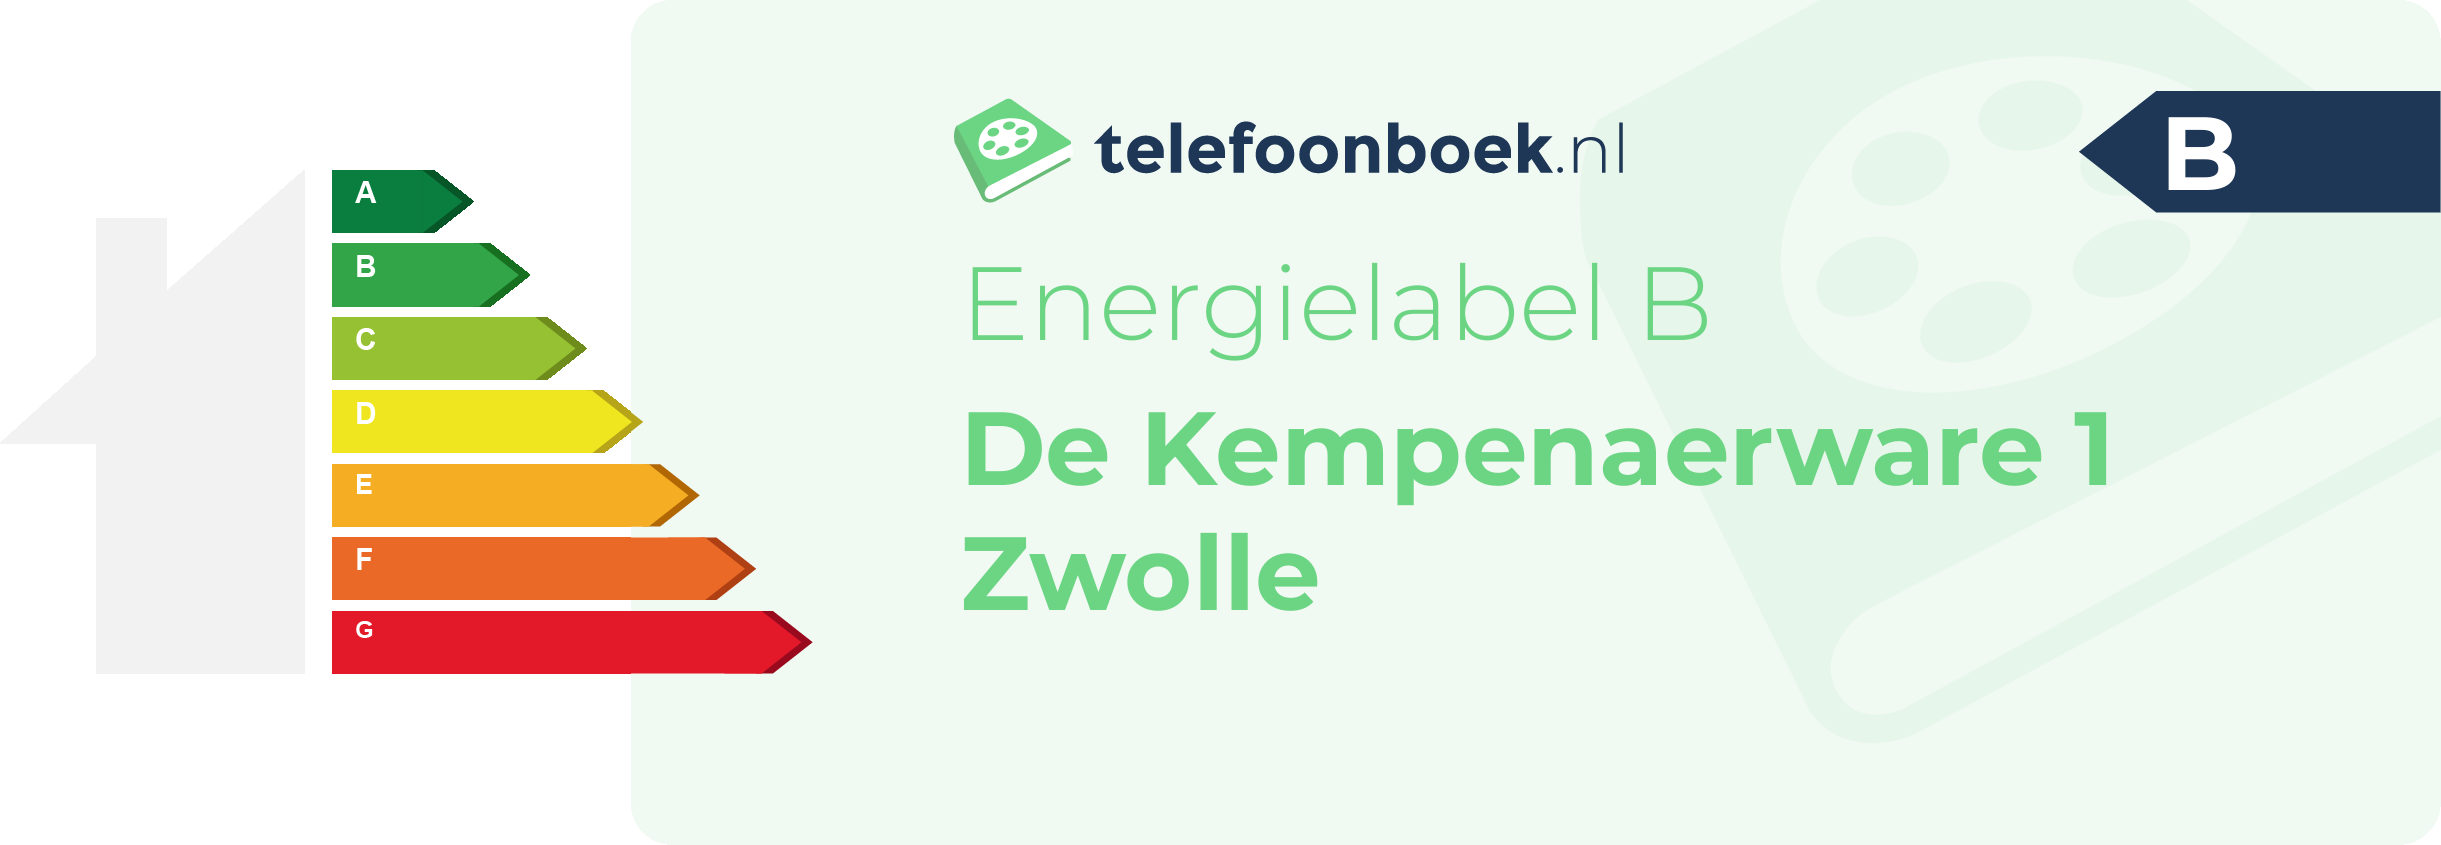 Energielabel De Kempenaerware 1 Zwolle